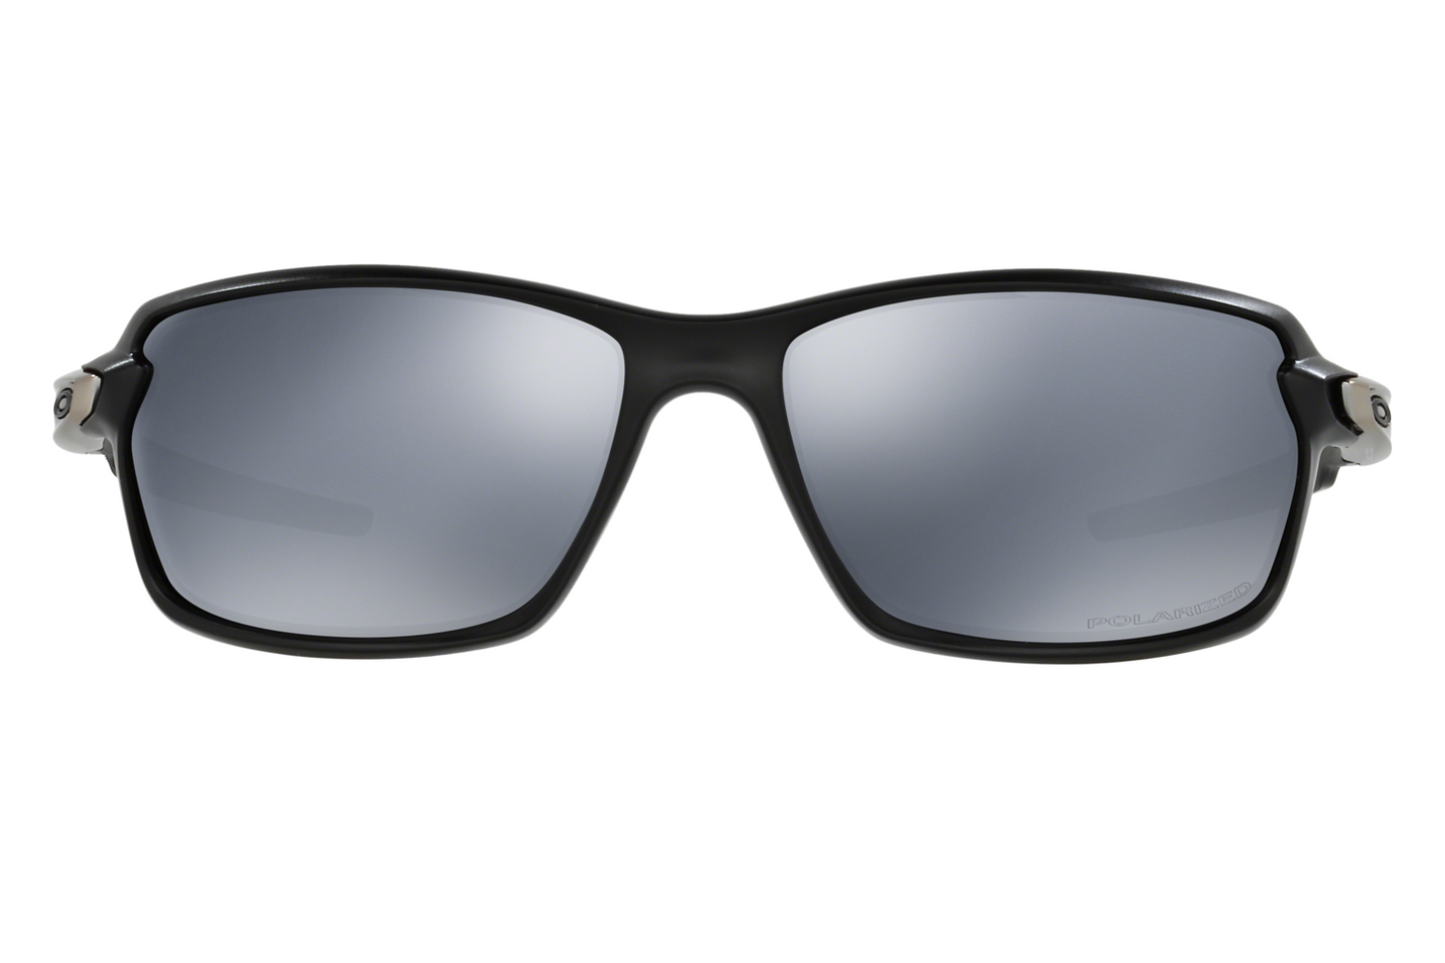 Oakley Sunglasses Carbon Shift OO9302 03 62 POLARIZED